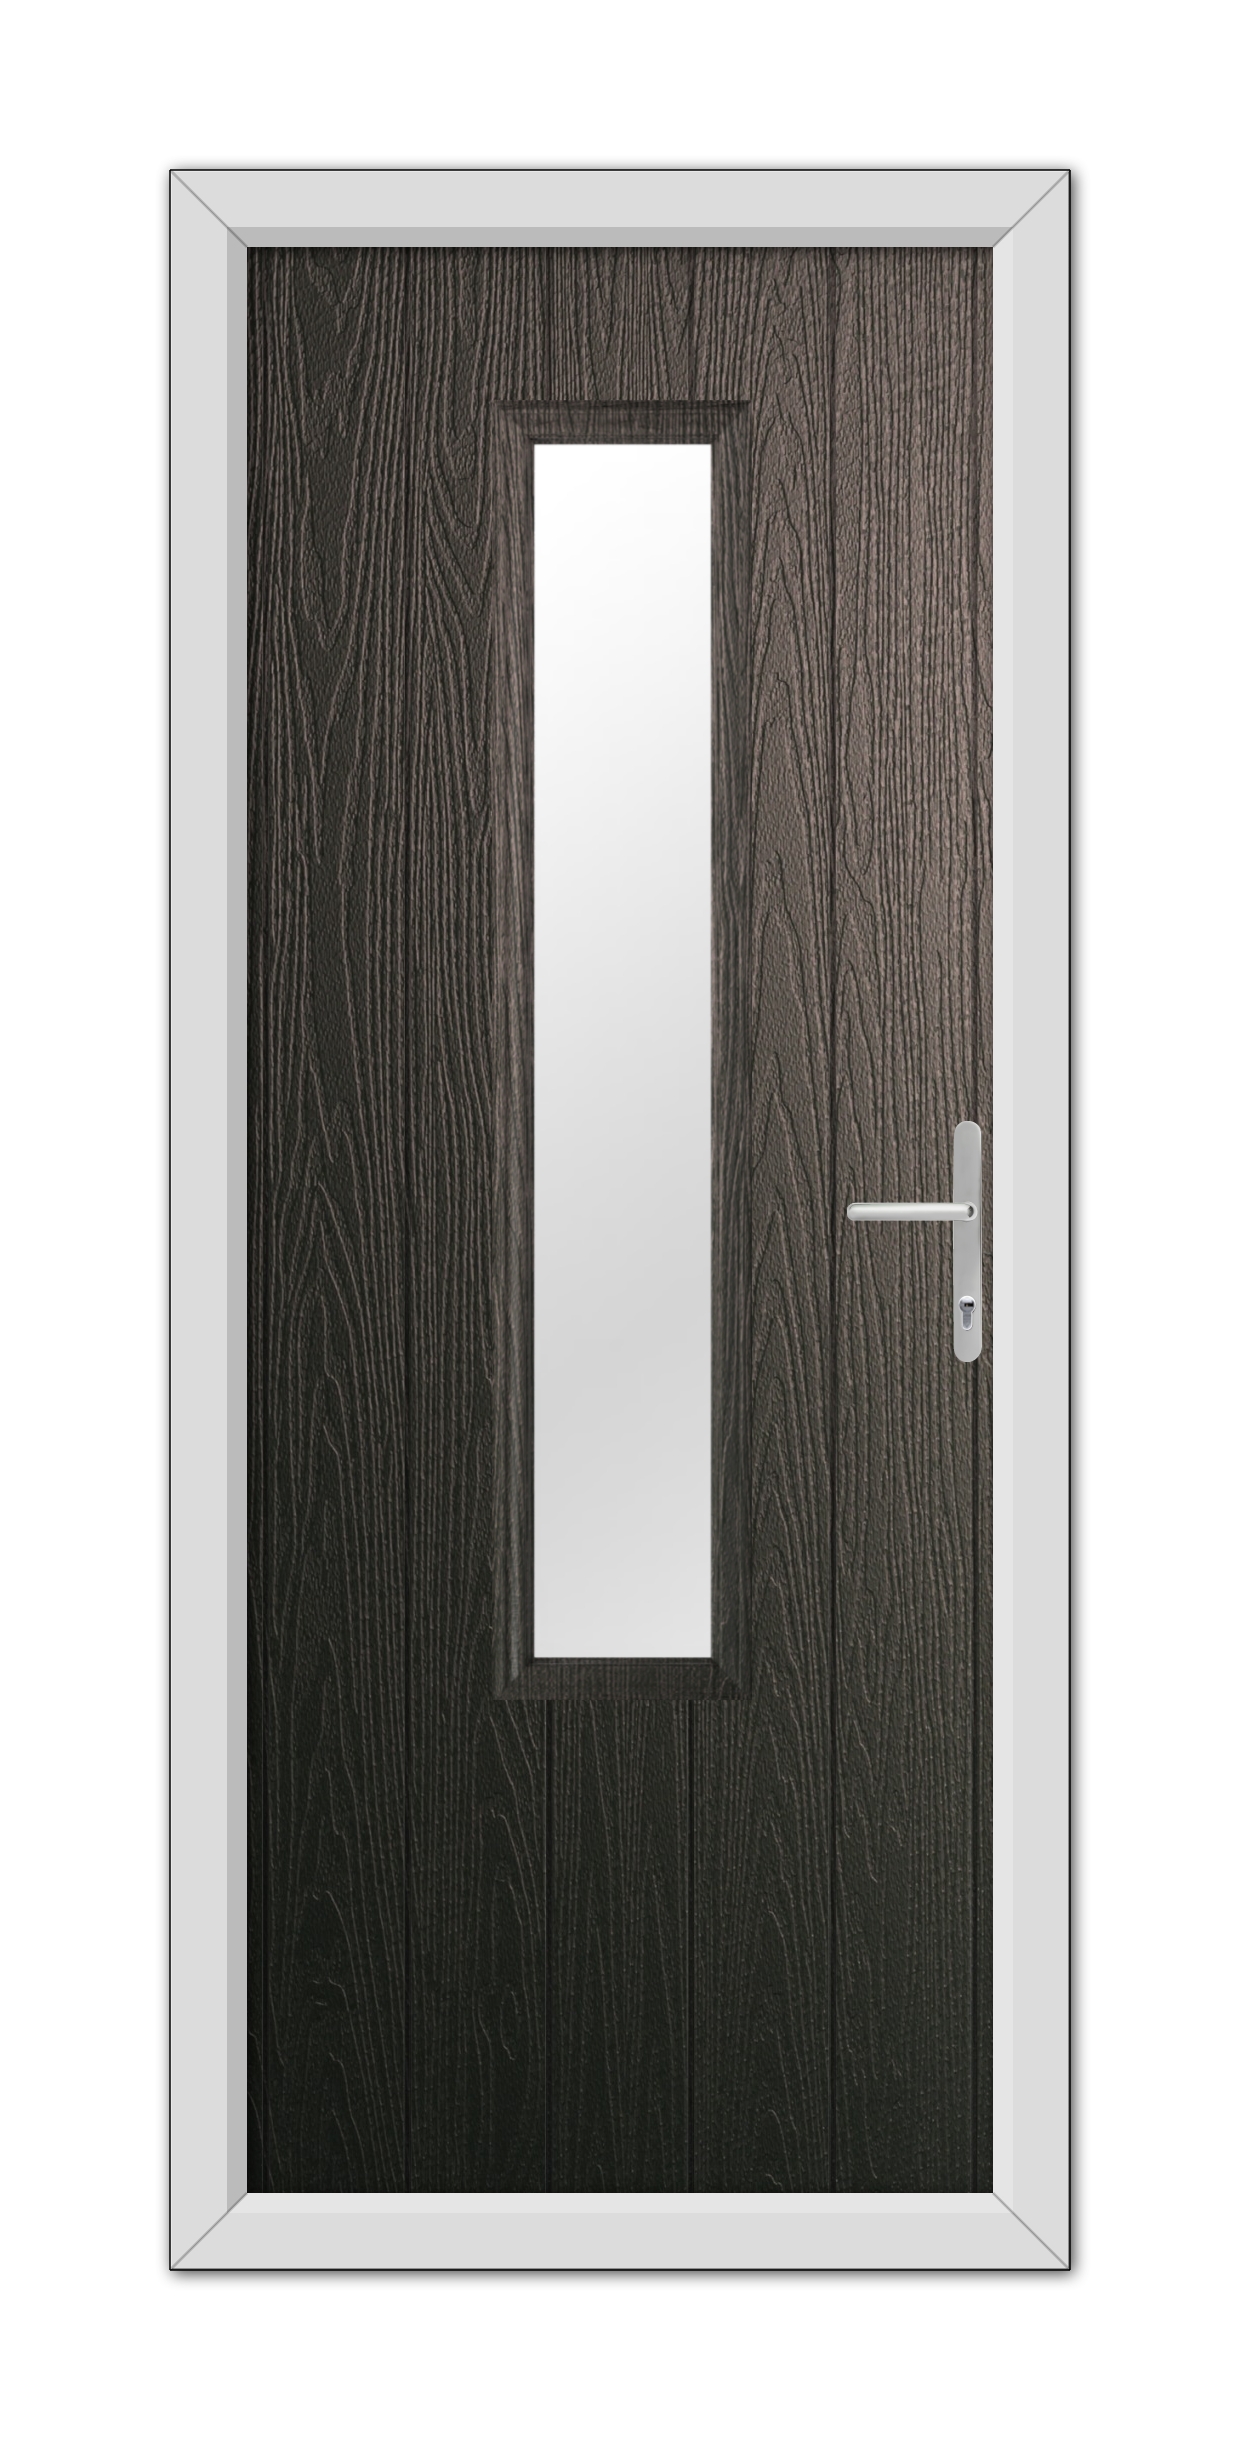 A modern Schwarzbraun Abercorn composite door with a vertical rectangular window and a metallic handle, set in a white frame.